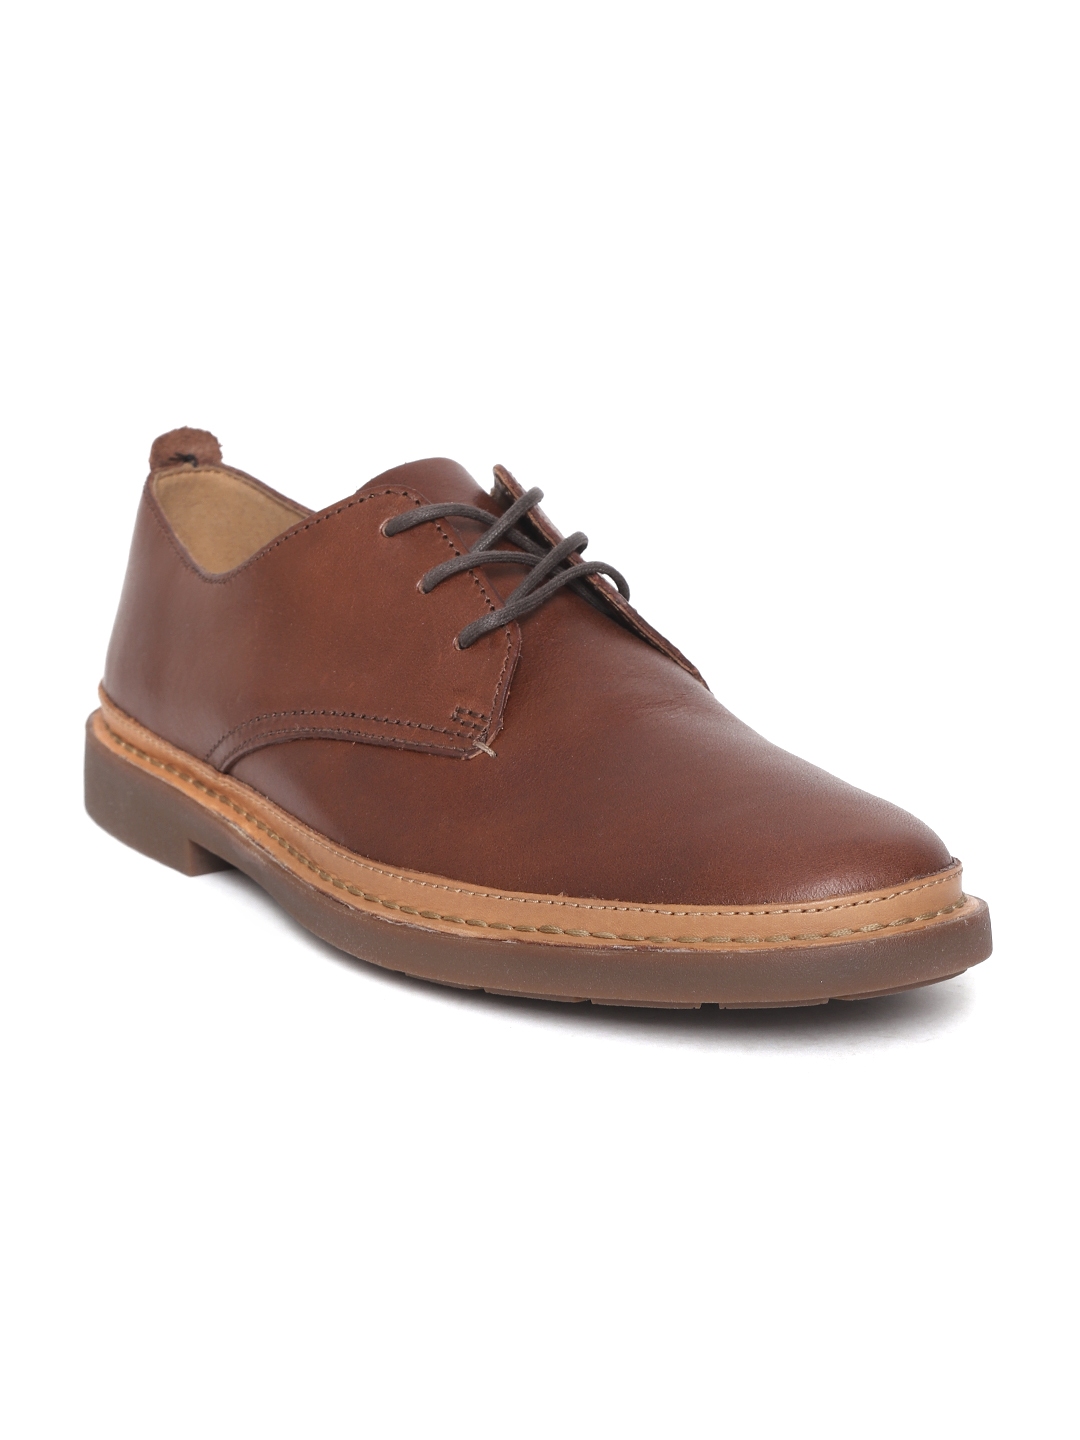 Buy Clarks Men Brown Solid Leather Derbys - Casual Shoes for Men ...